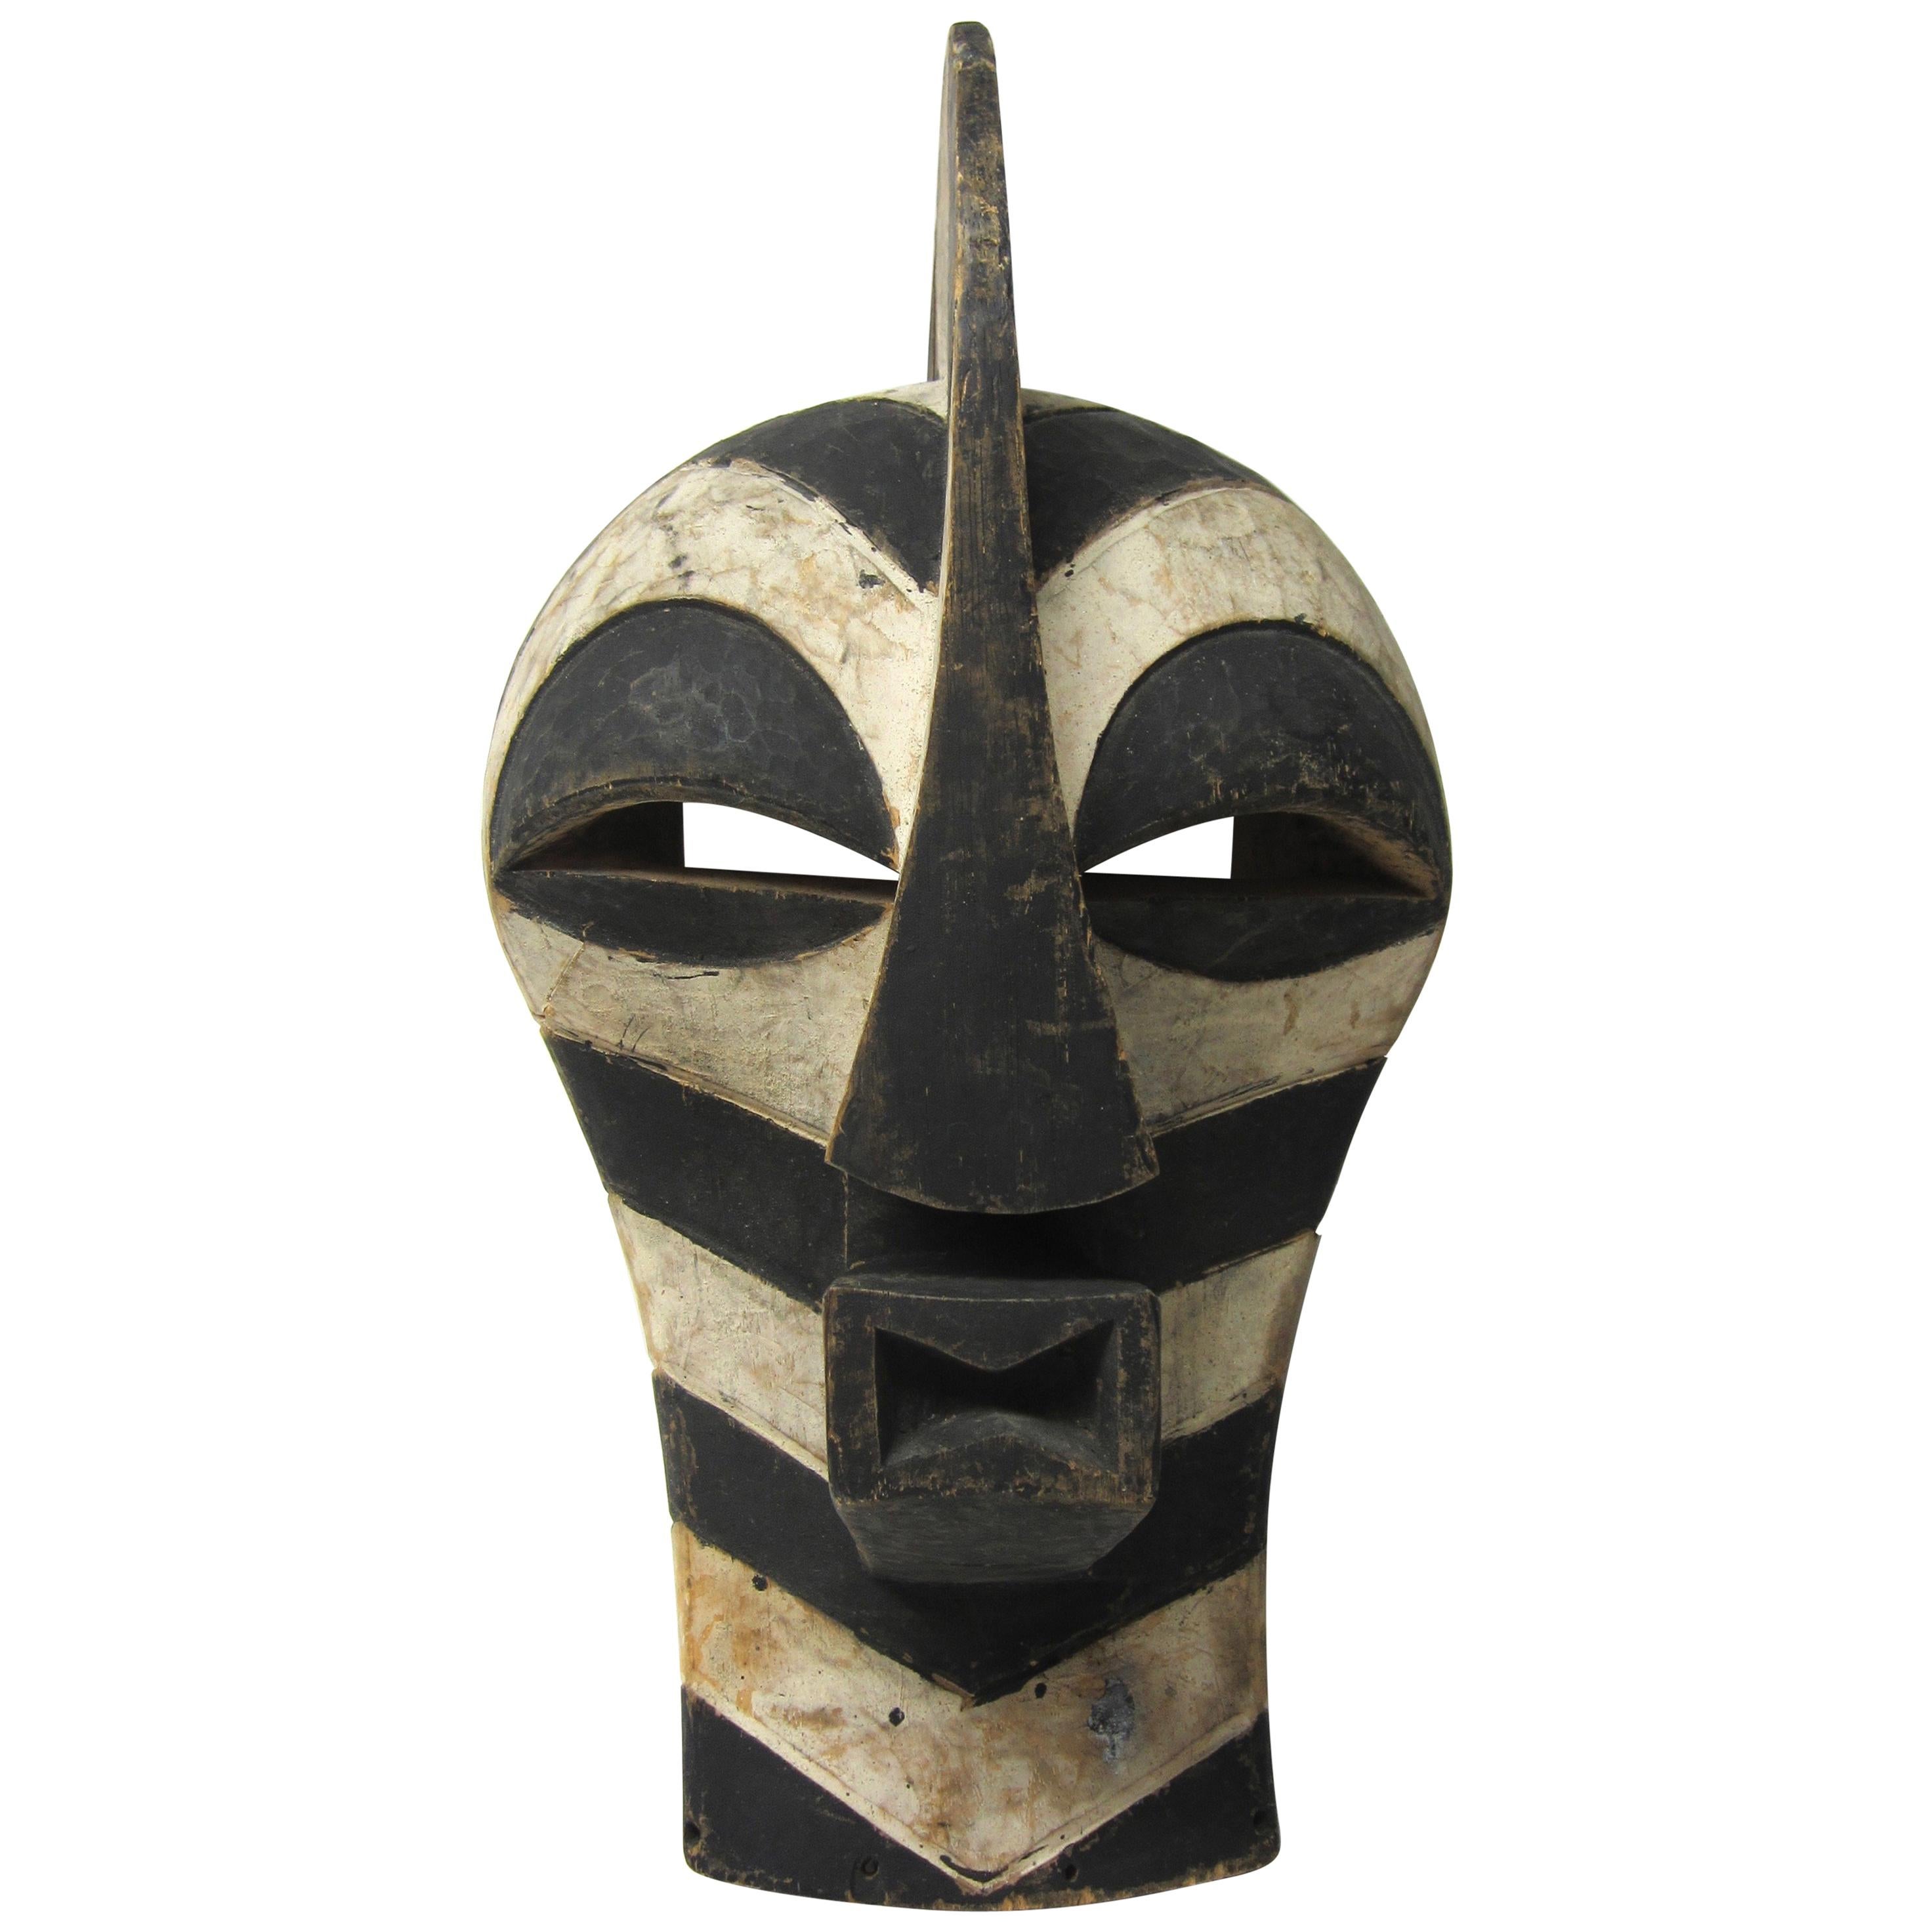 Black and White "Zebra" Tribal Mask